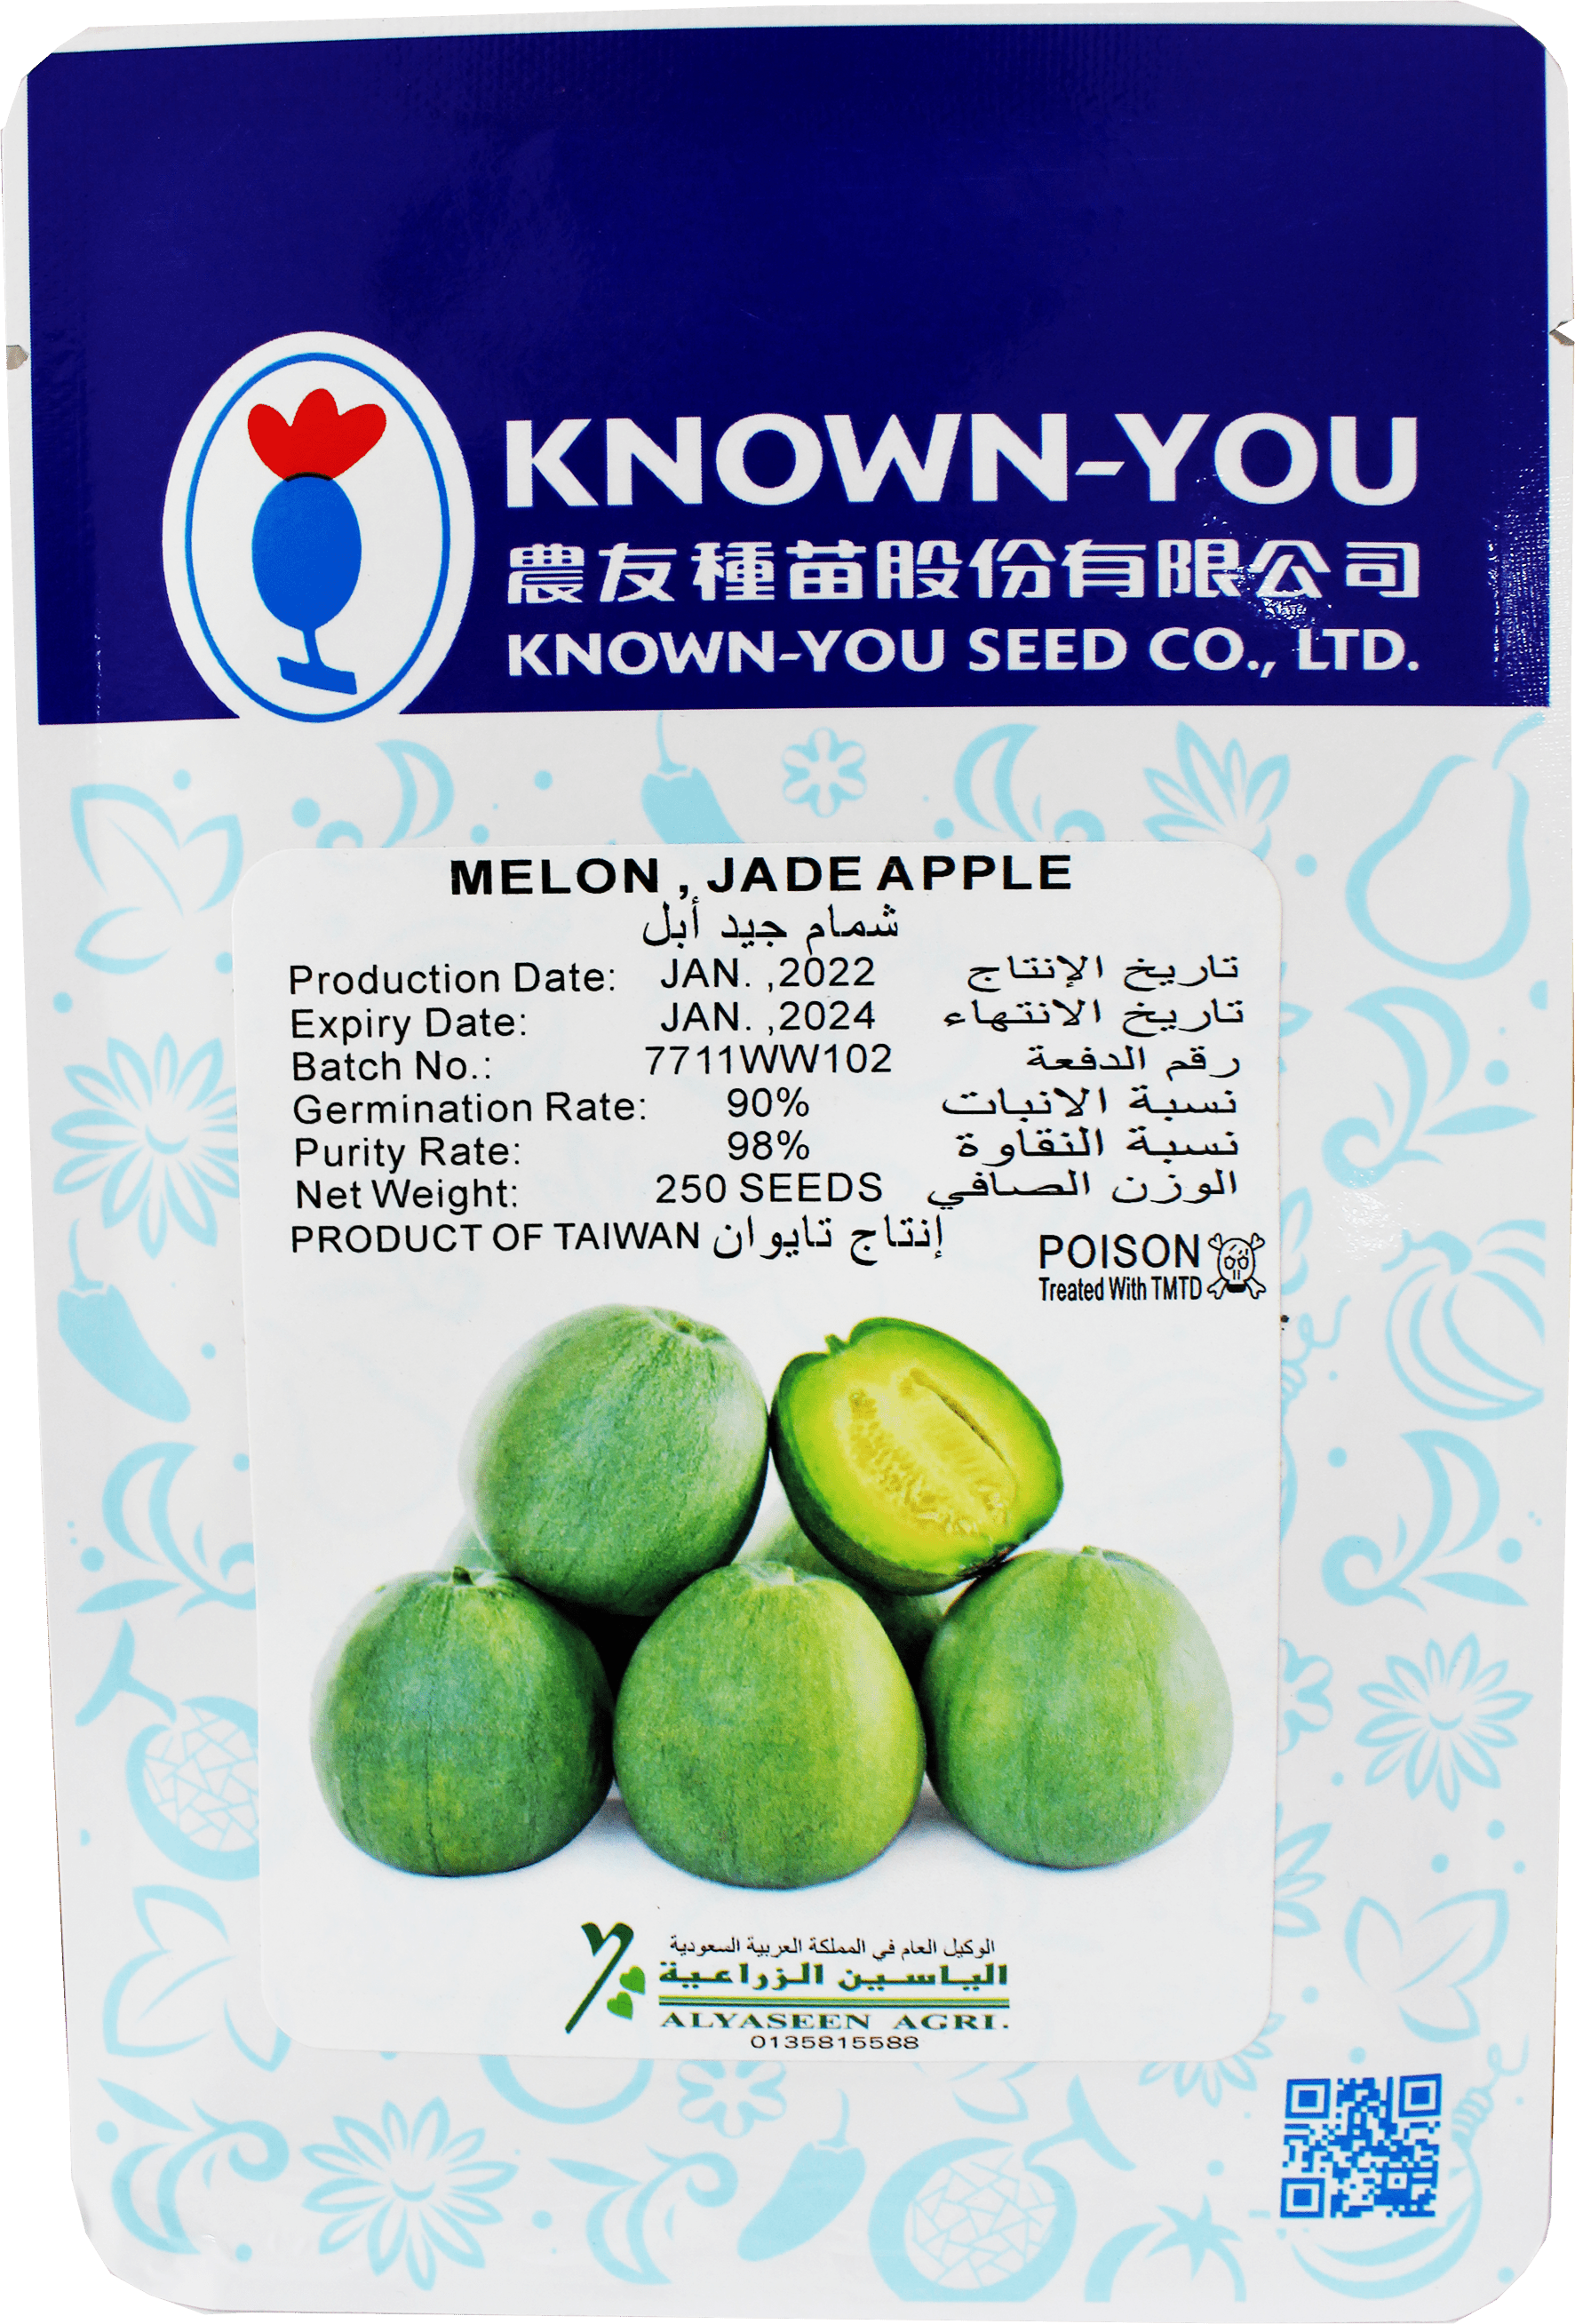 Melon Jade Apple